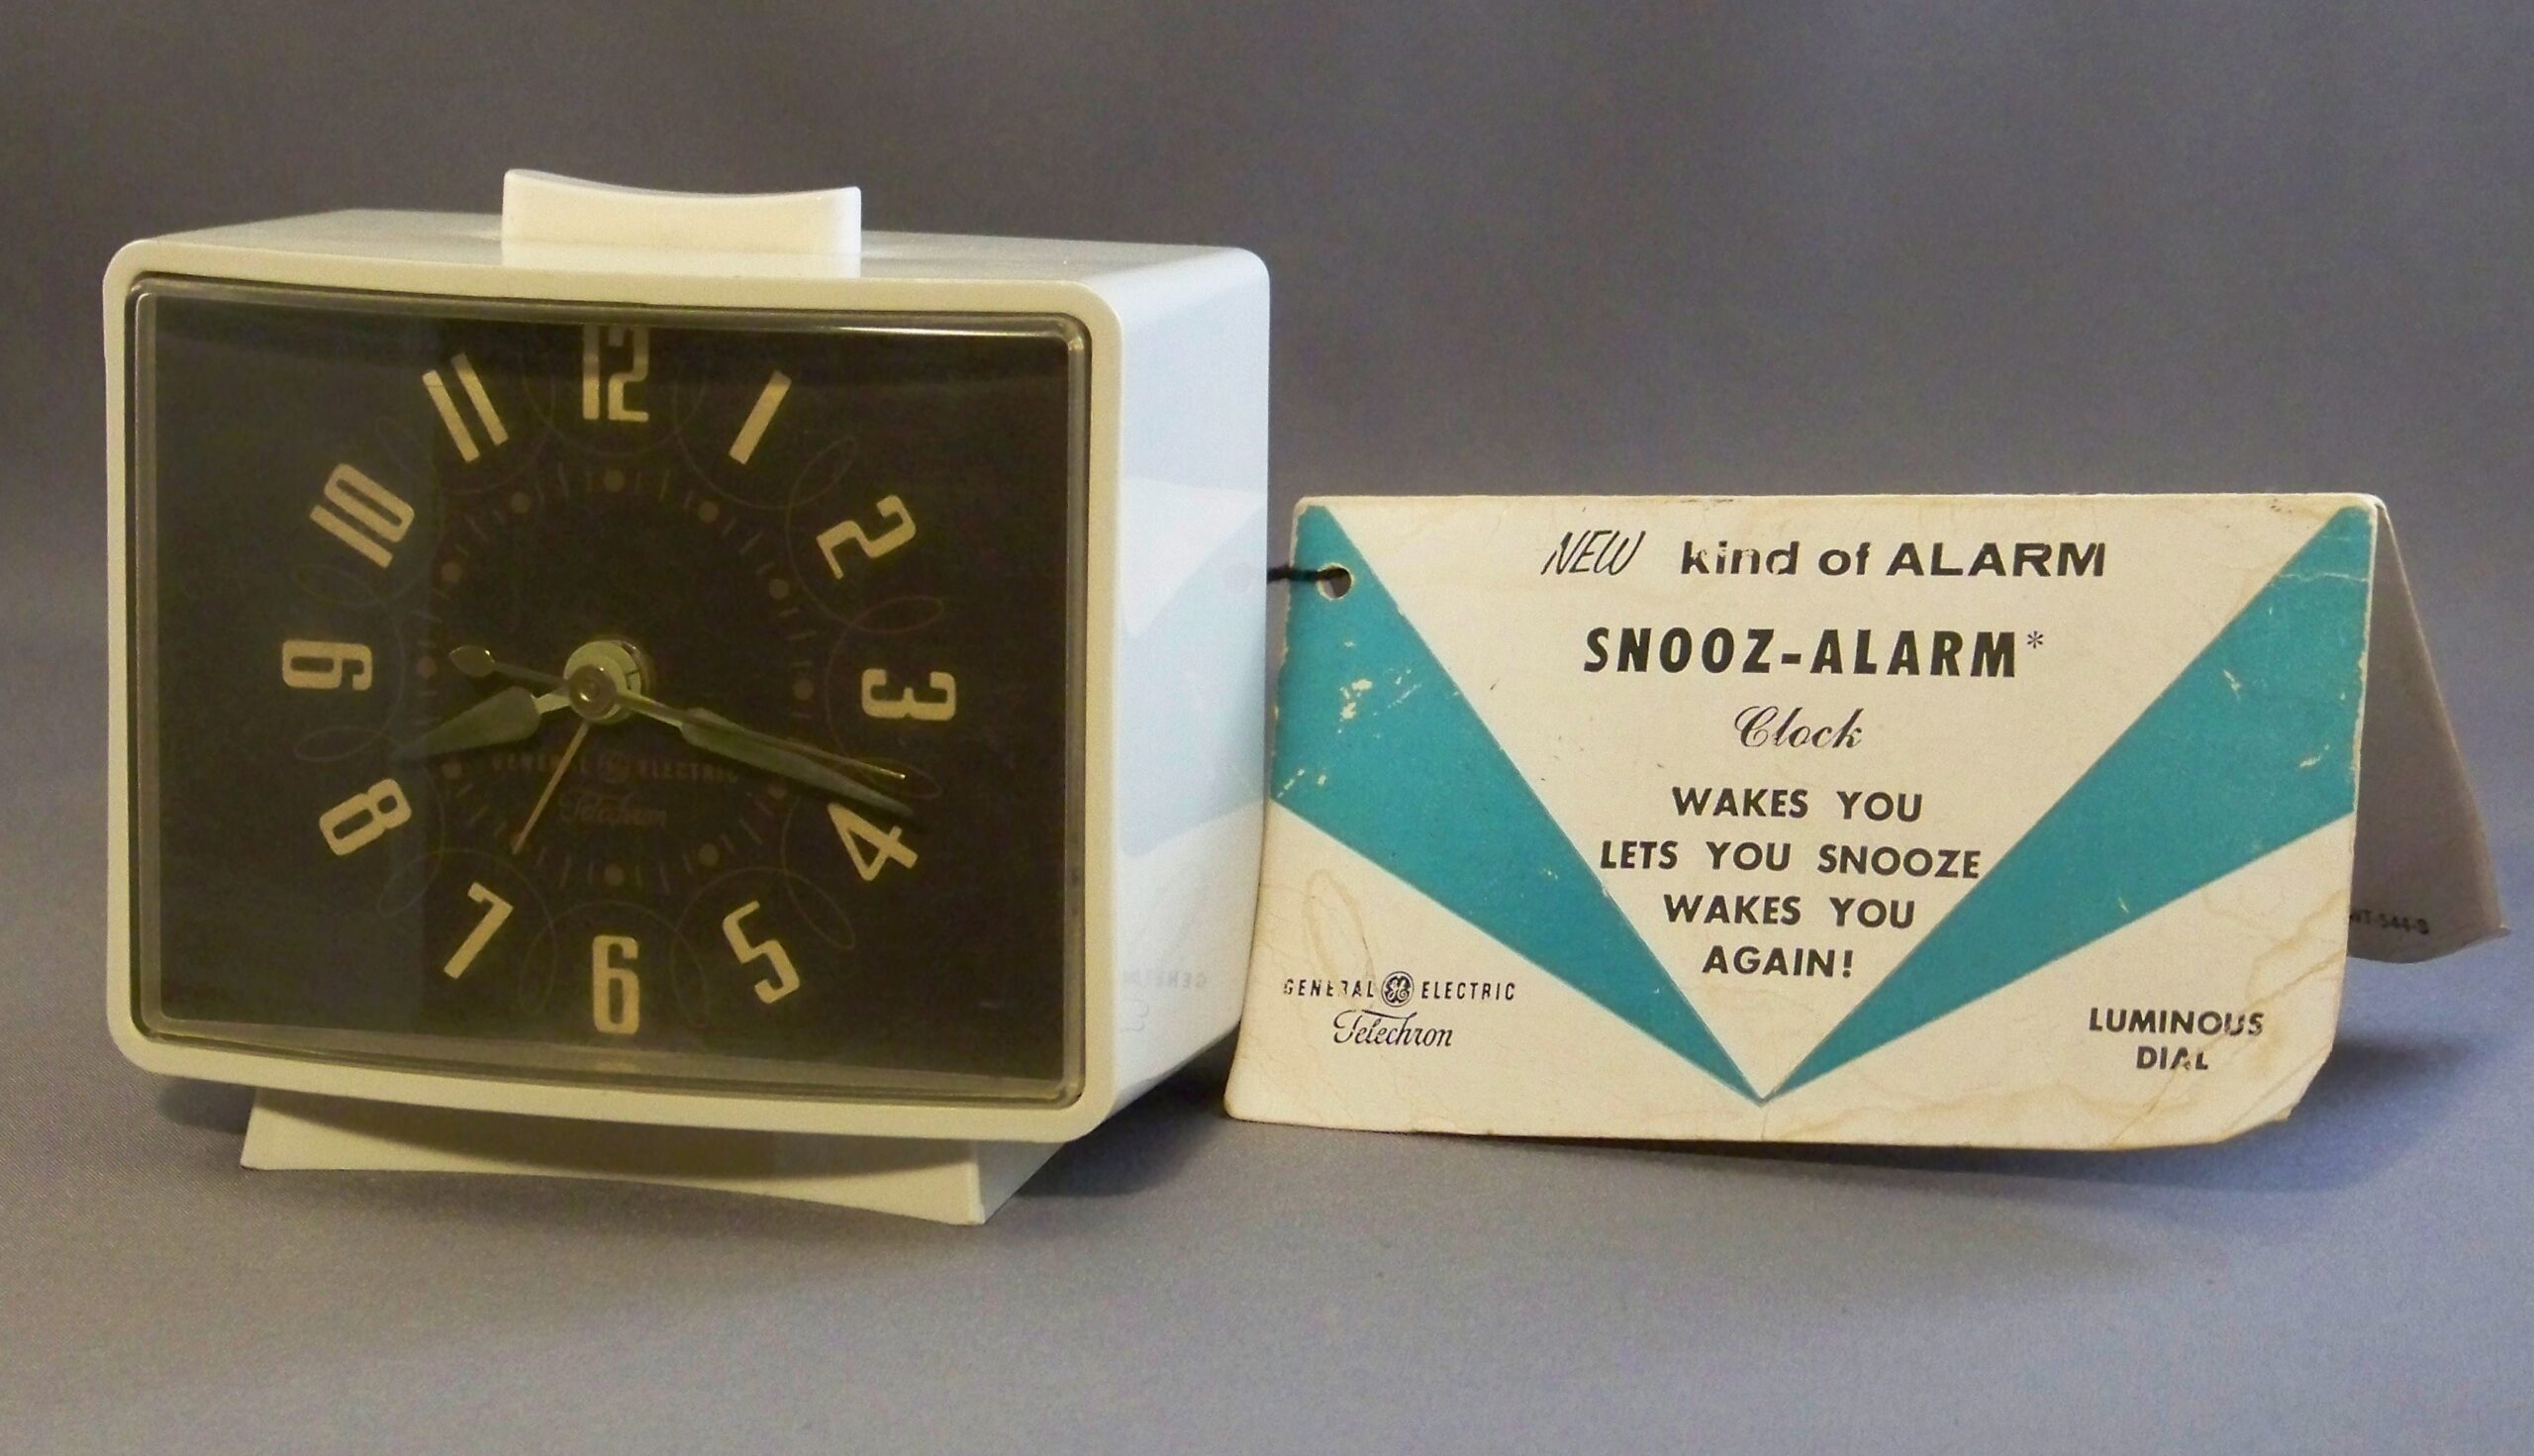  Telechron 推出的首款 Snooz-Alarm 鬧鐘 7H241 